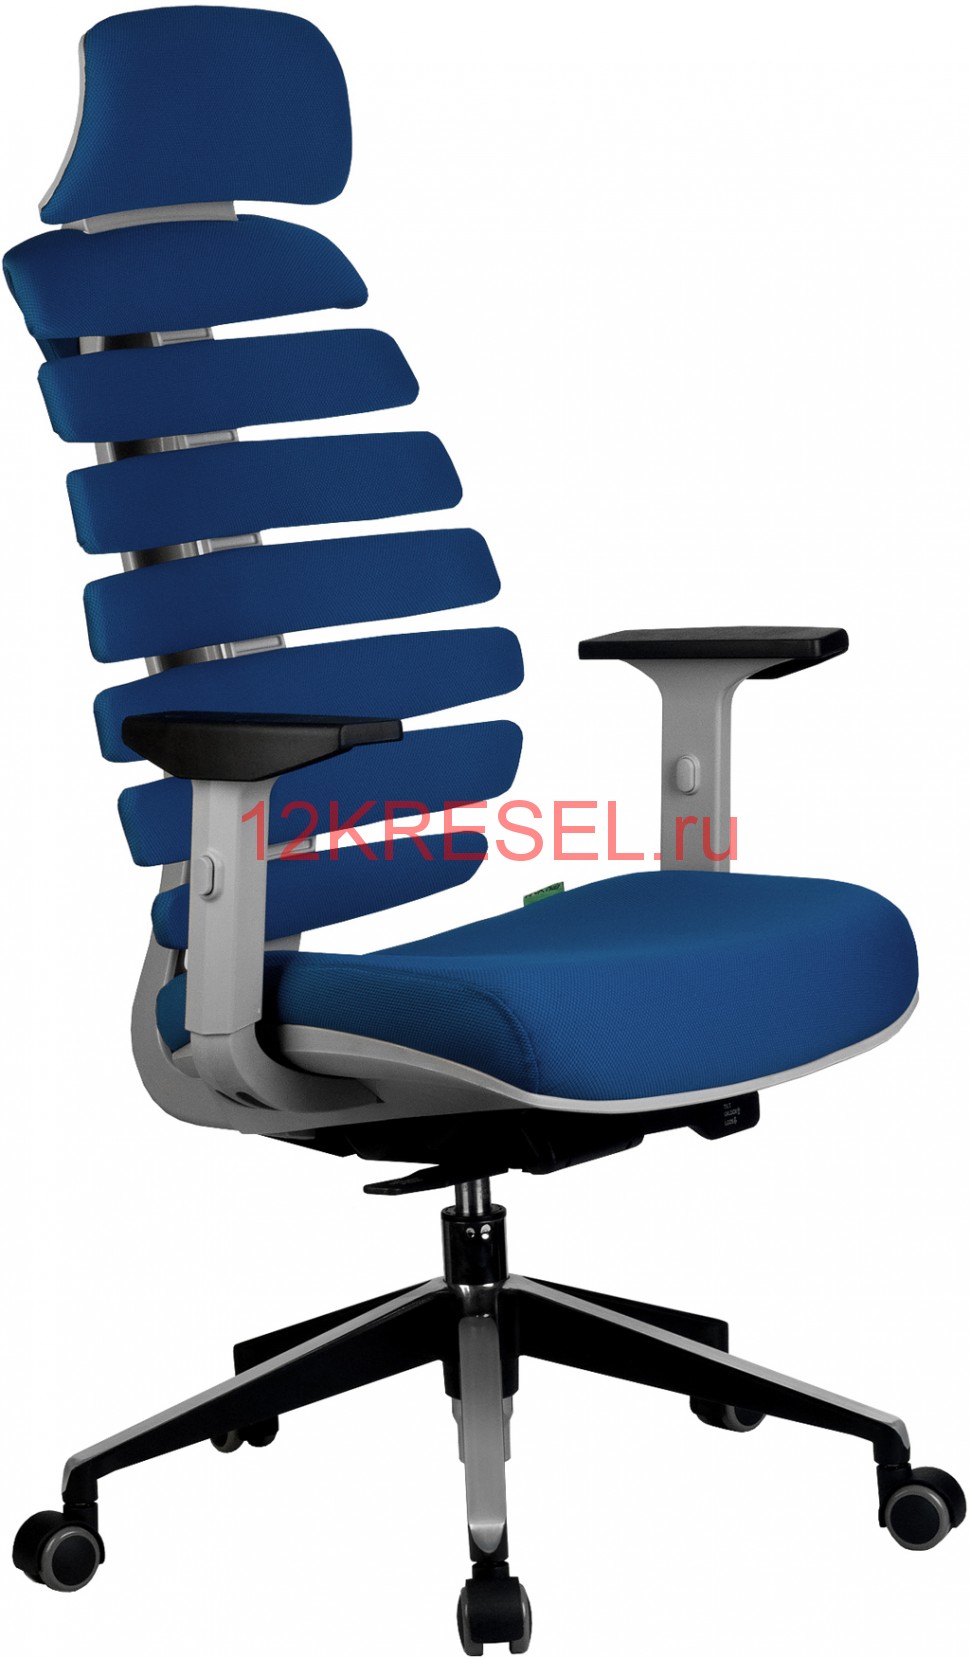 Shop Chairs Ru Интернет Магазин